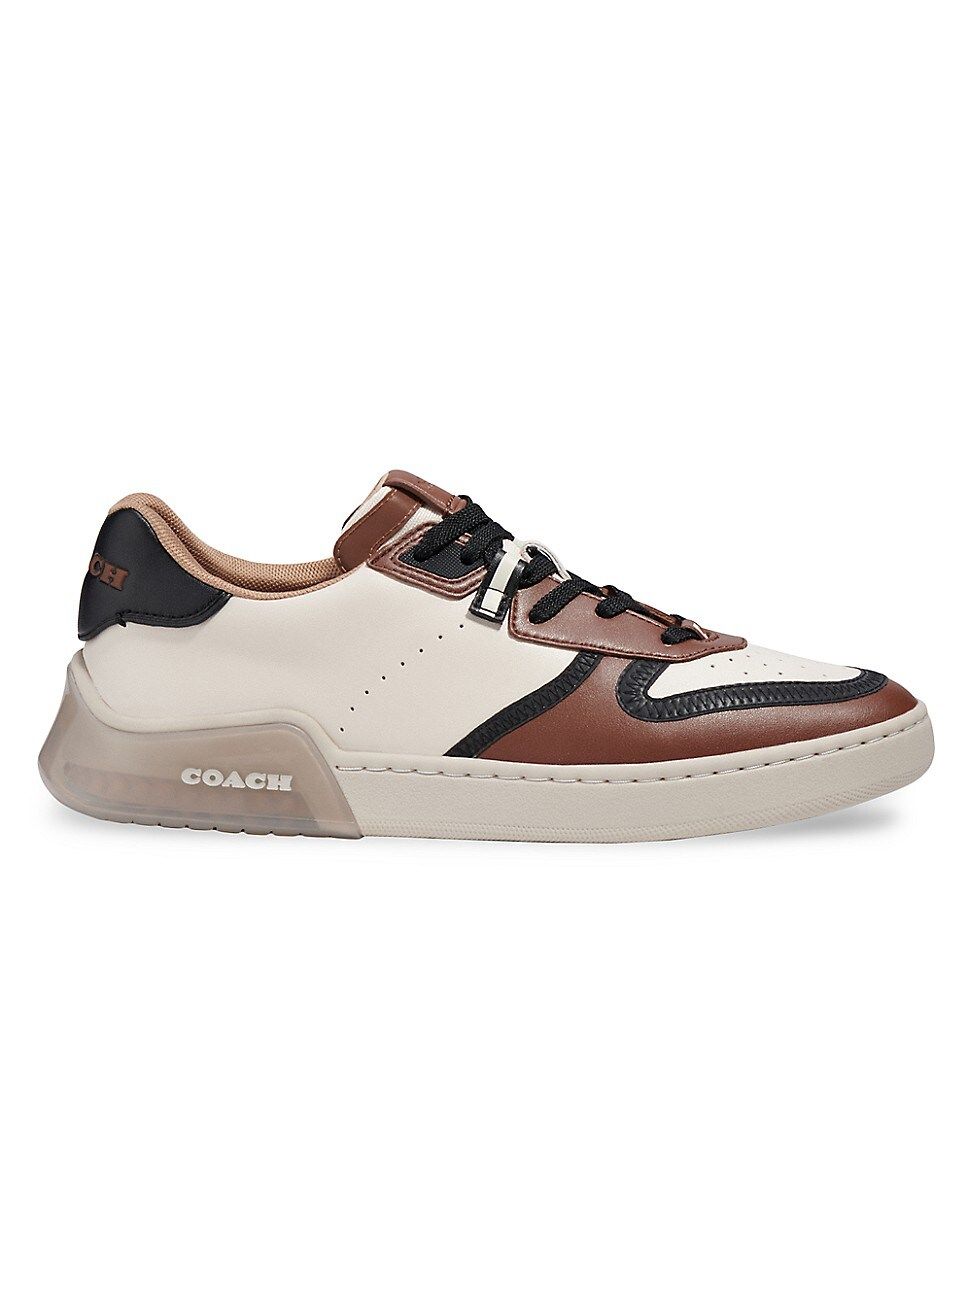 Men's Citysole Leather Court Sneakers - Saddle Chalk - Size 8 | Saks Fifth Avenue